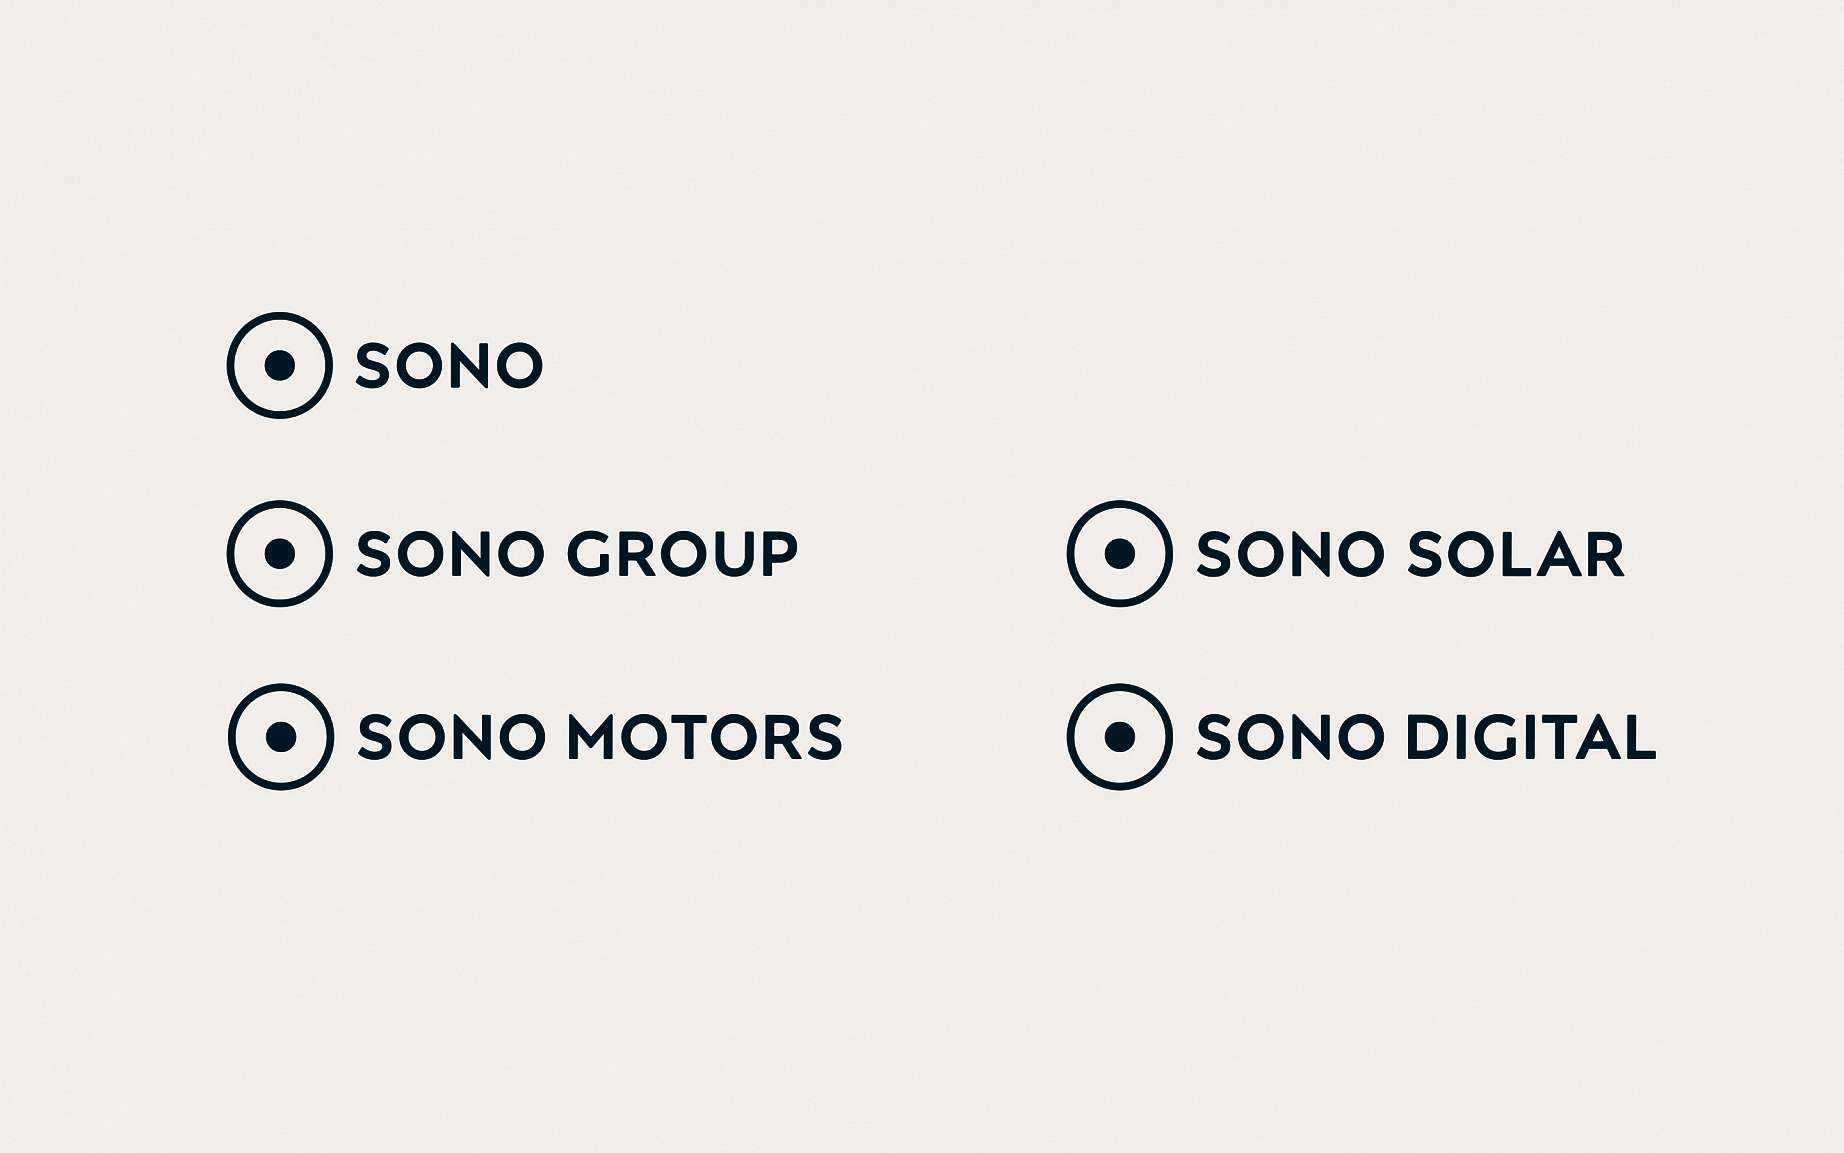 Das neue Sono Motors-Logosystem